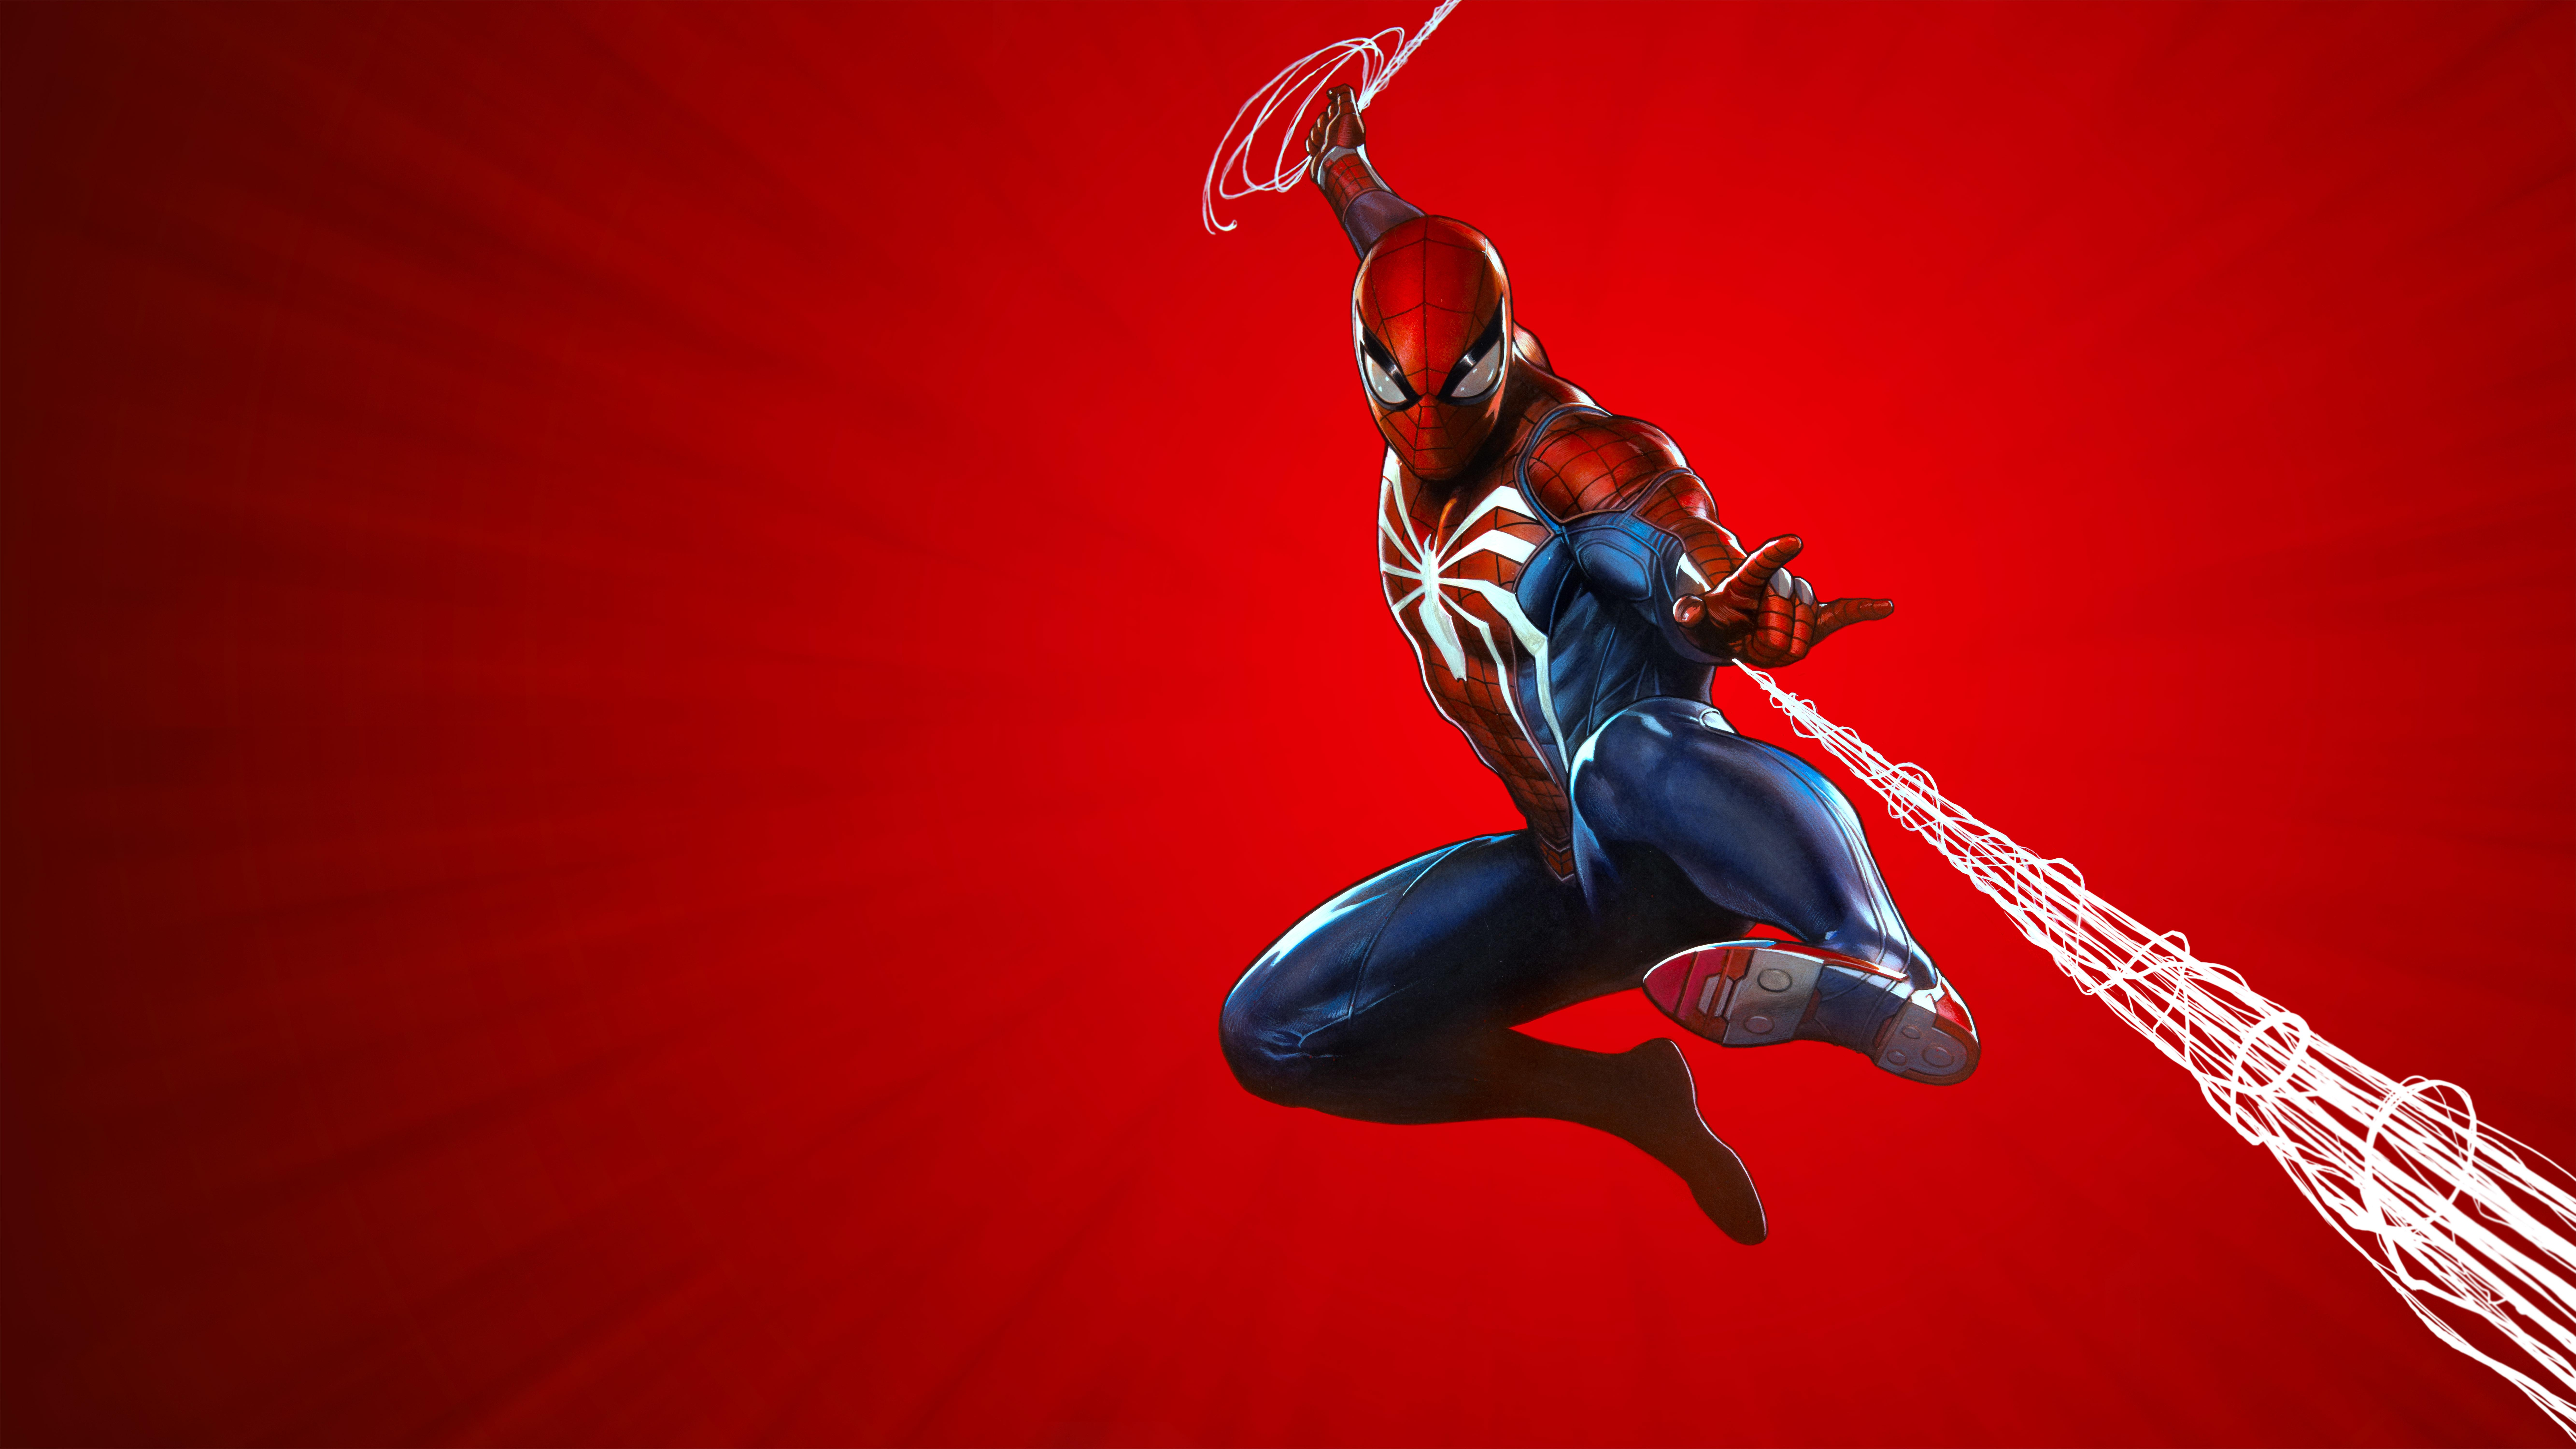 Spider Man PS4 Wallpaper, HD Games 4K Wallpaper, Image